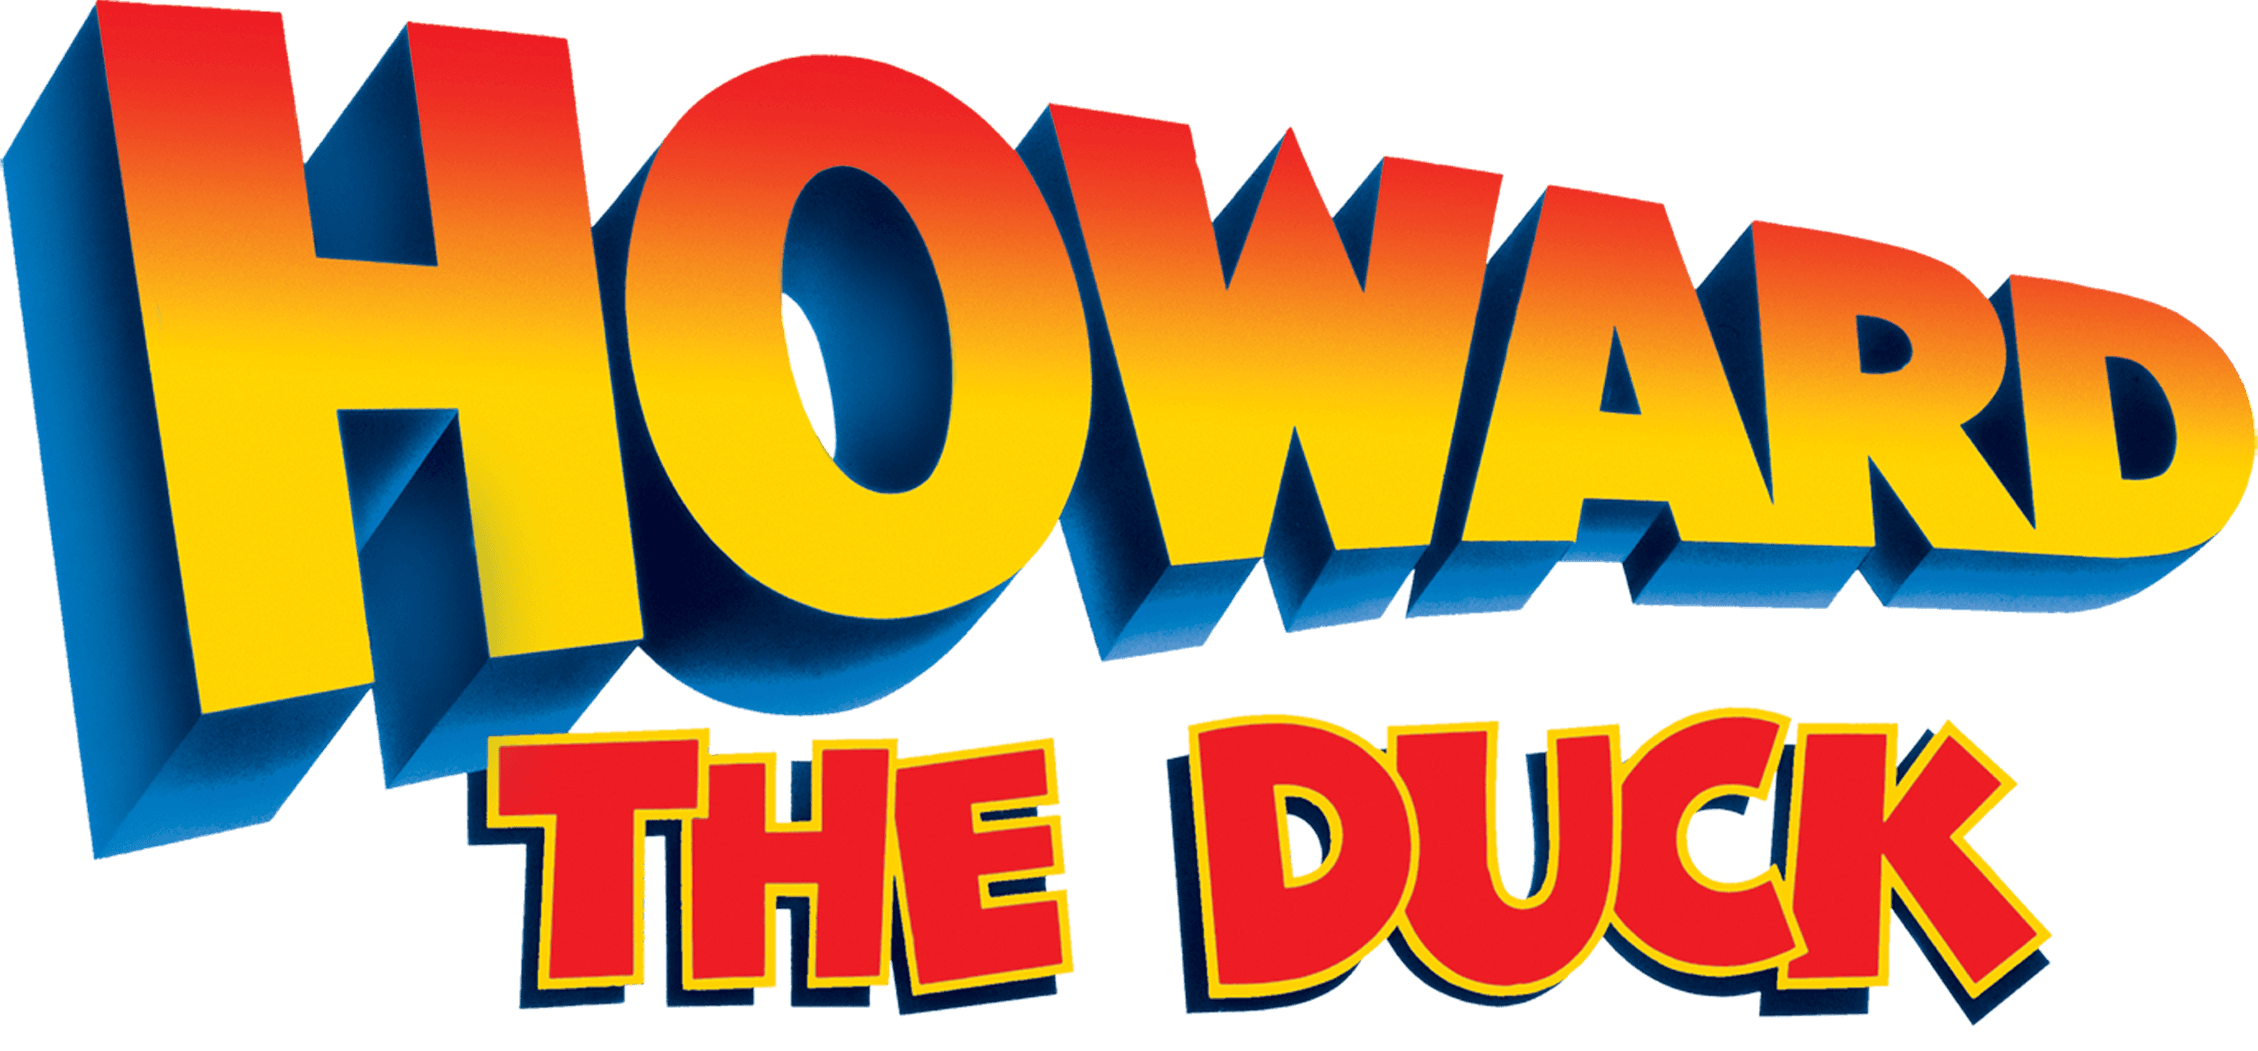 Howard the Duck logo